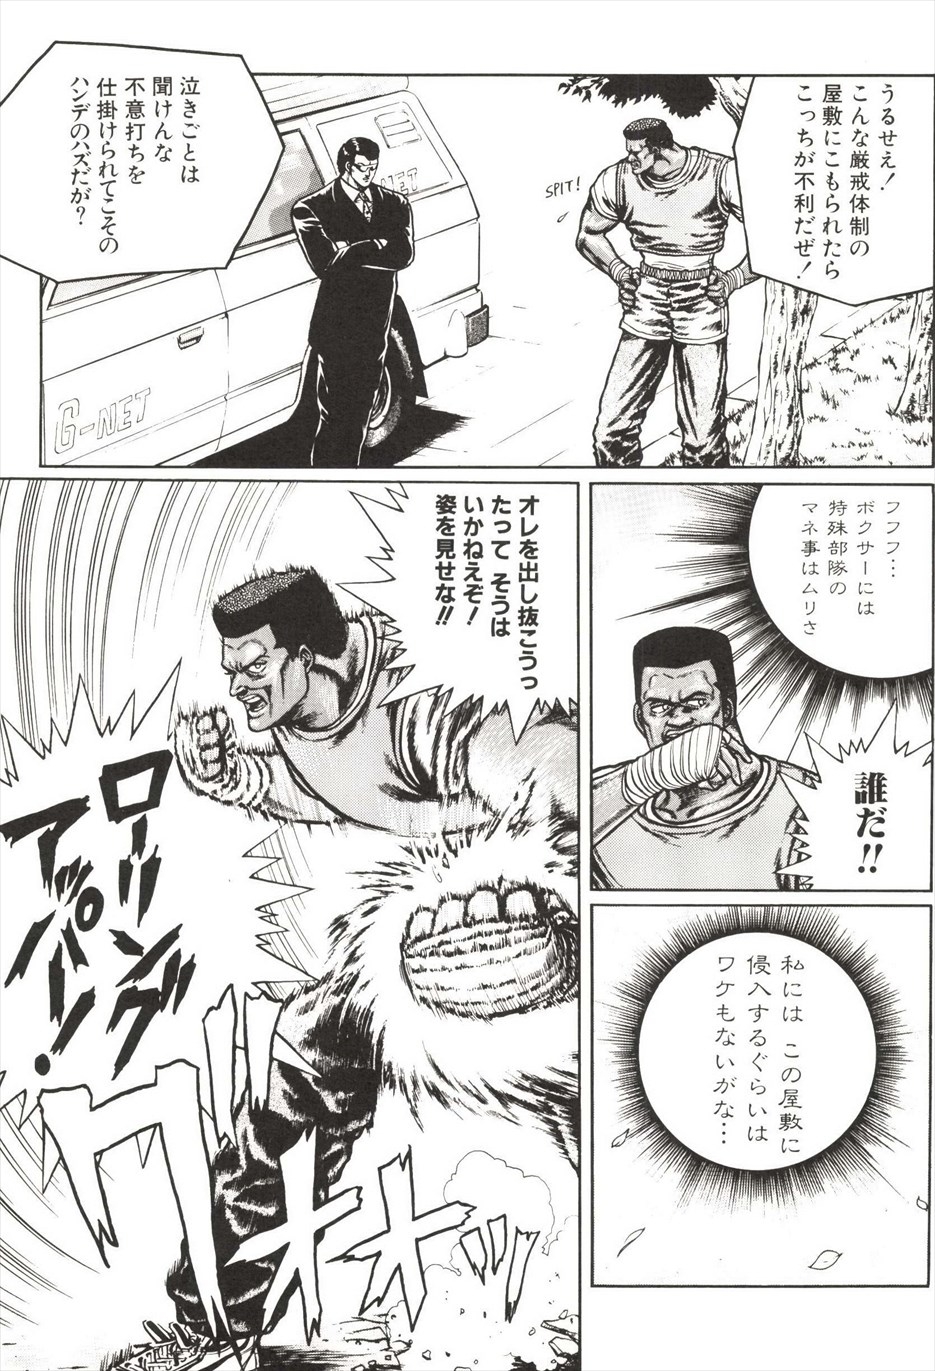 [amazishi etsuya] ART OF FIGHTING ryuuko no ken 2-2 40